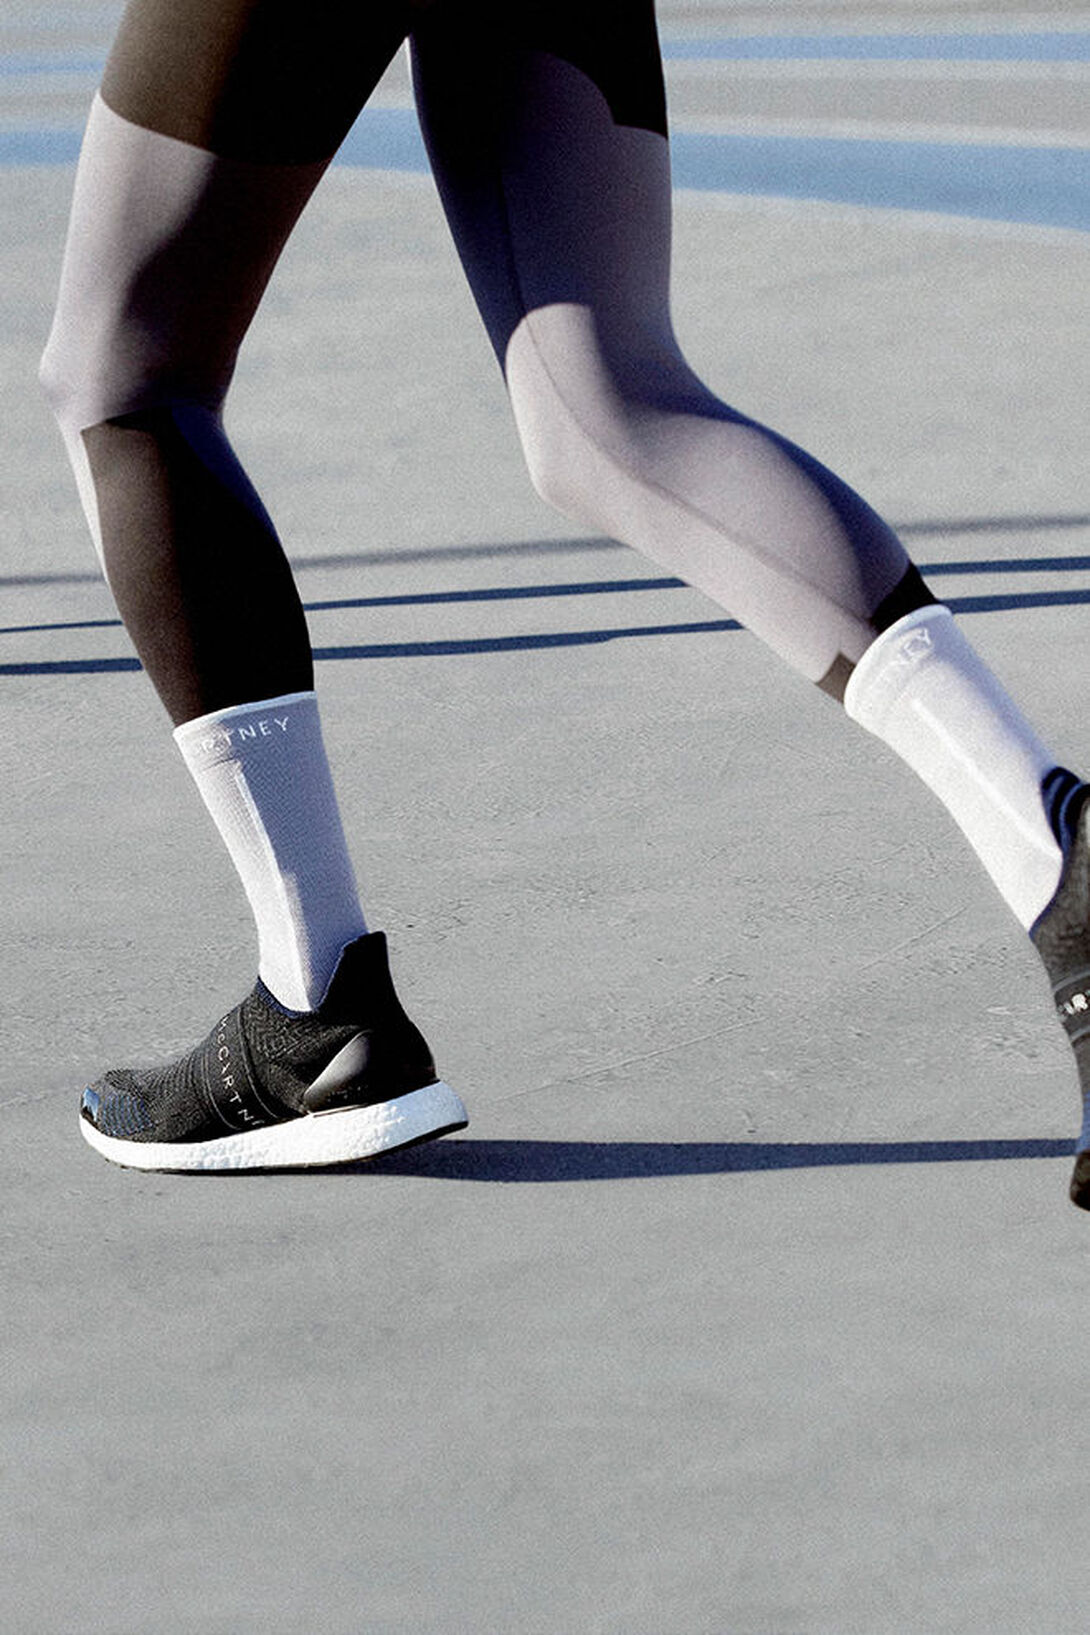 The adidas by Stella McCartney AlphaEdge 4D sneaker